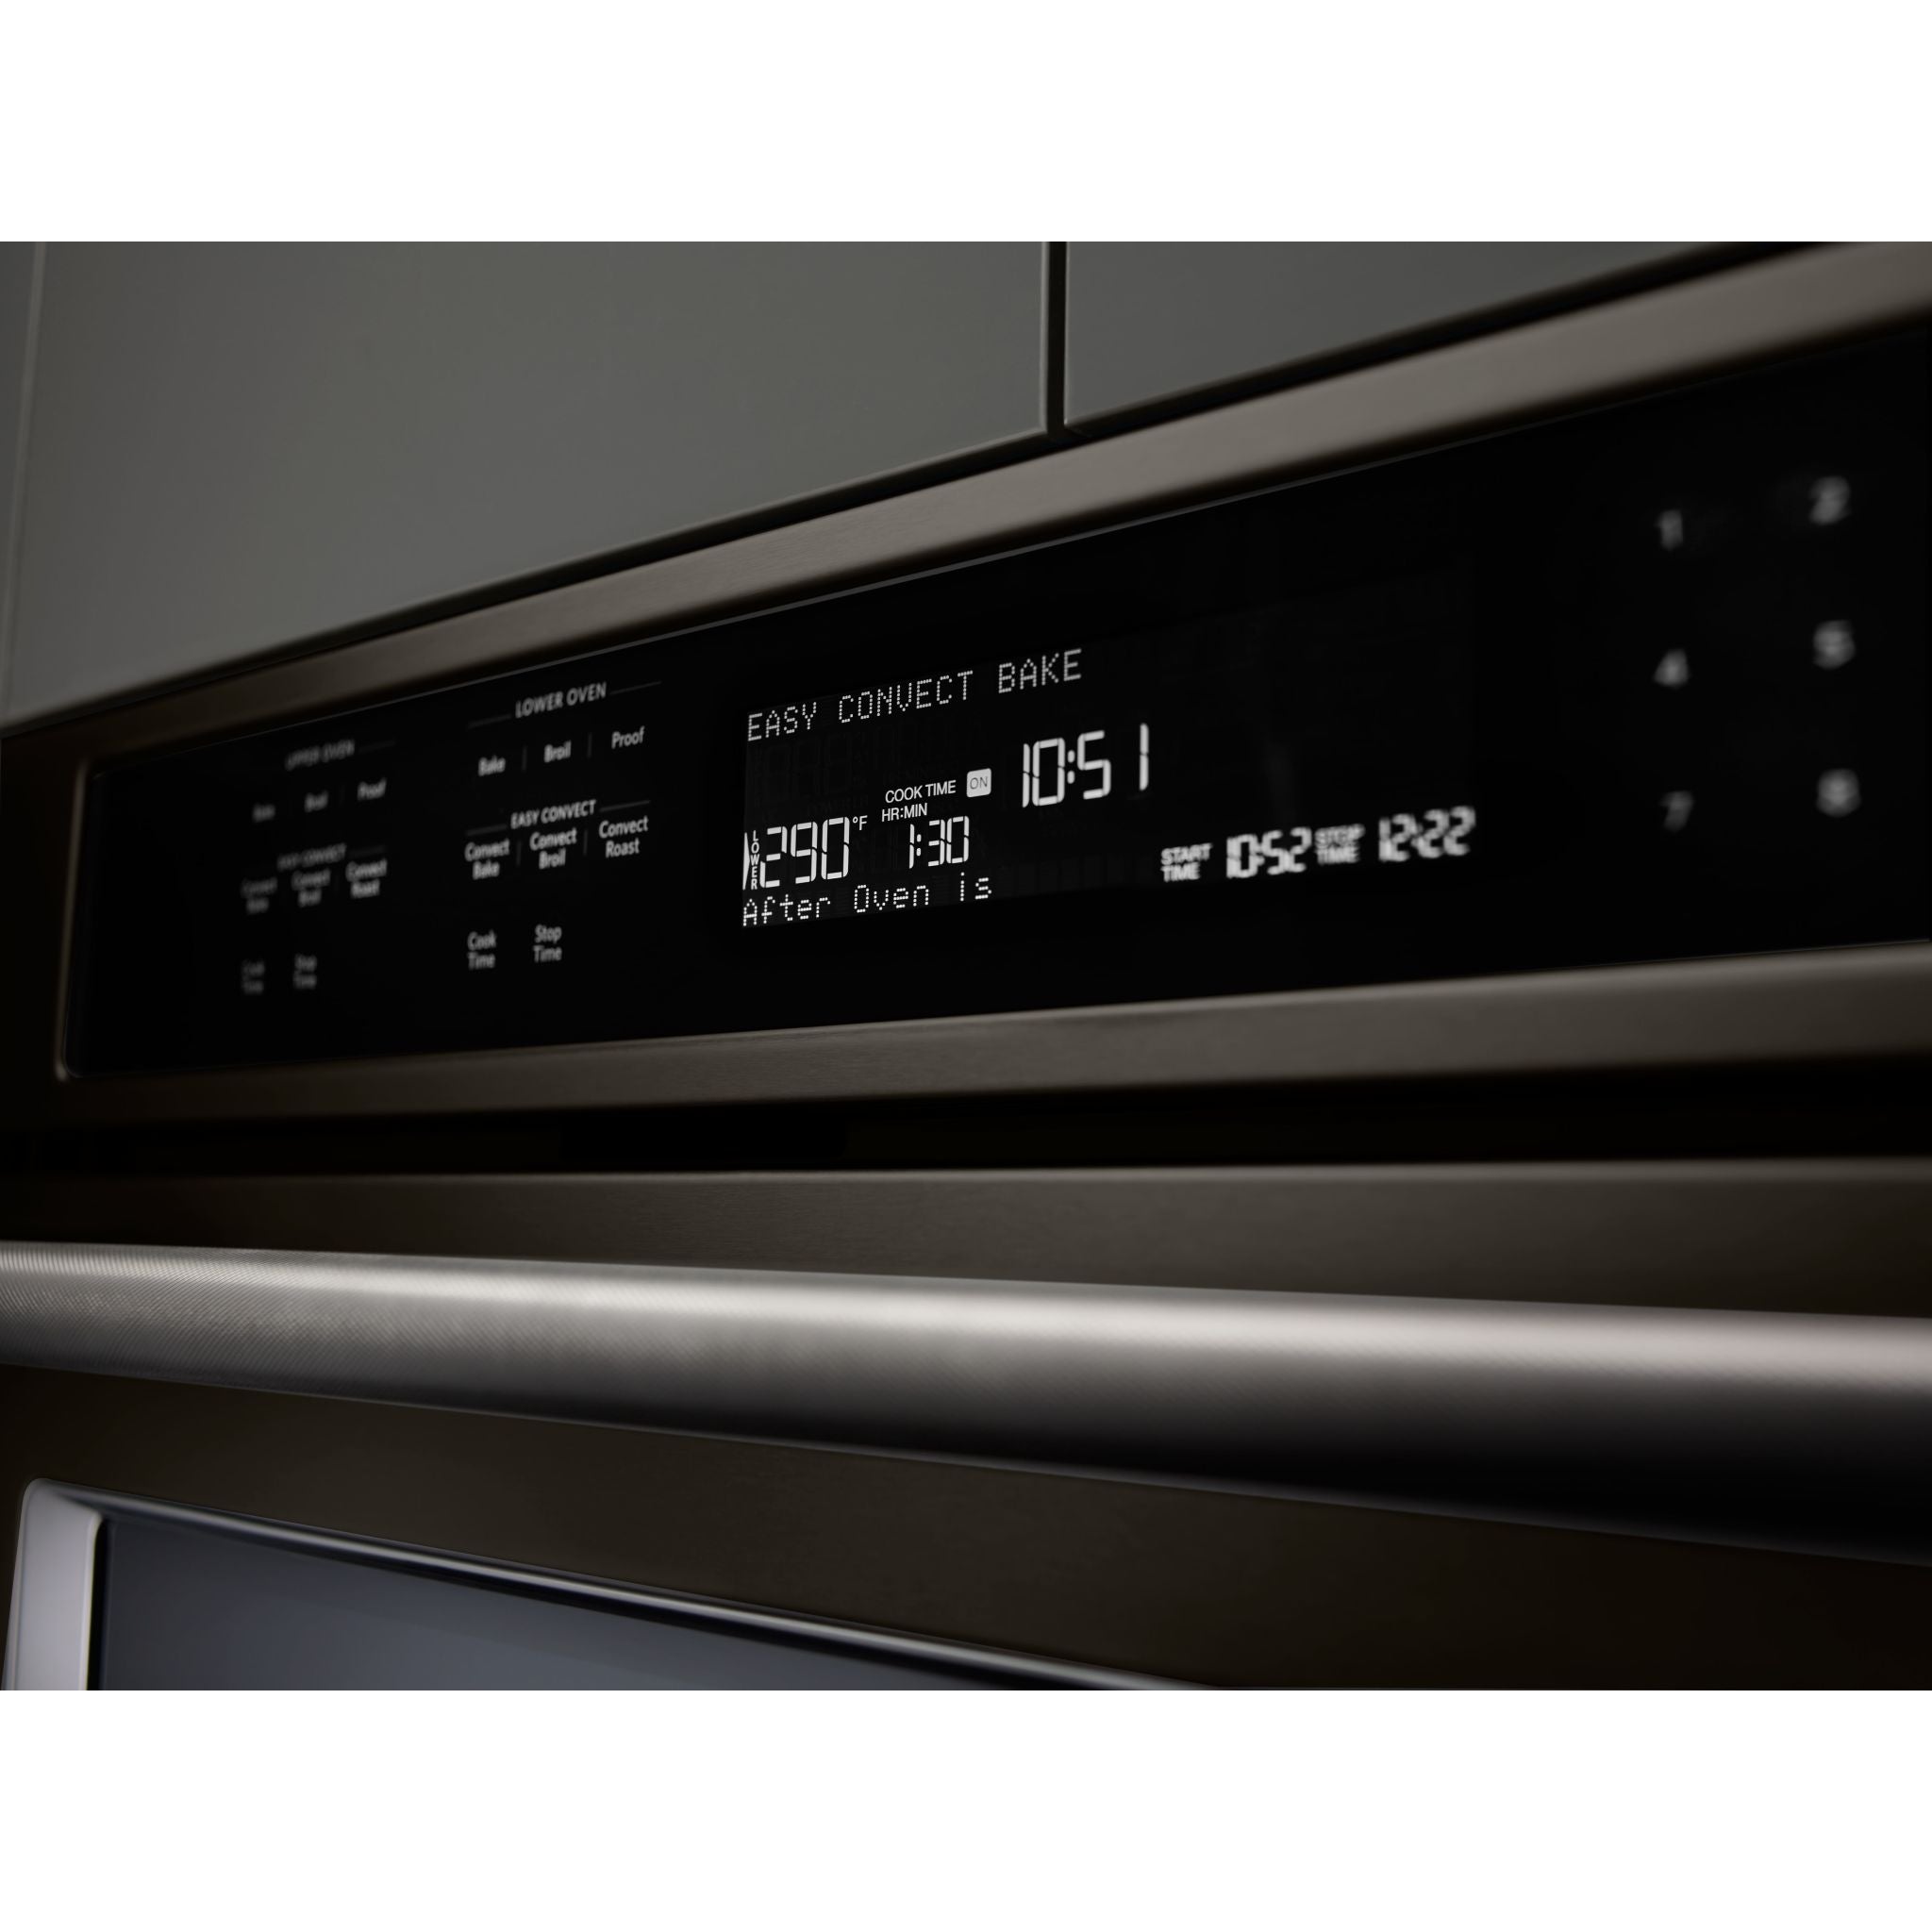 KitchenAid, KitchenAid 30" Double Wall Oven (KODE500EBS) - Black Stainless